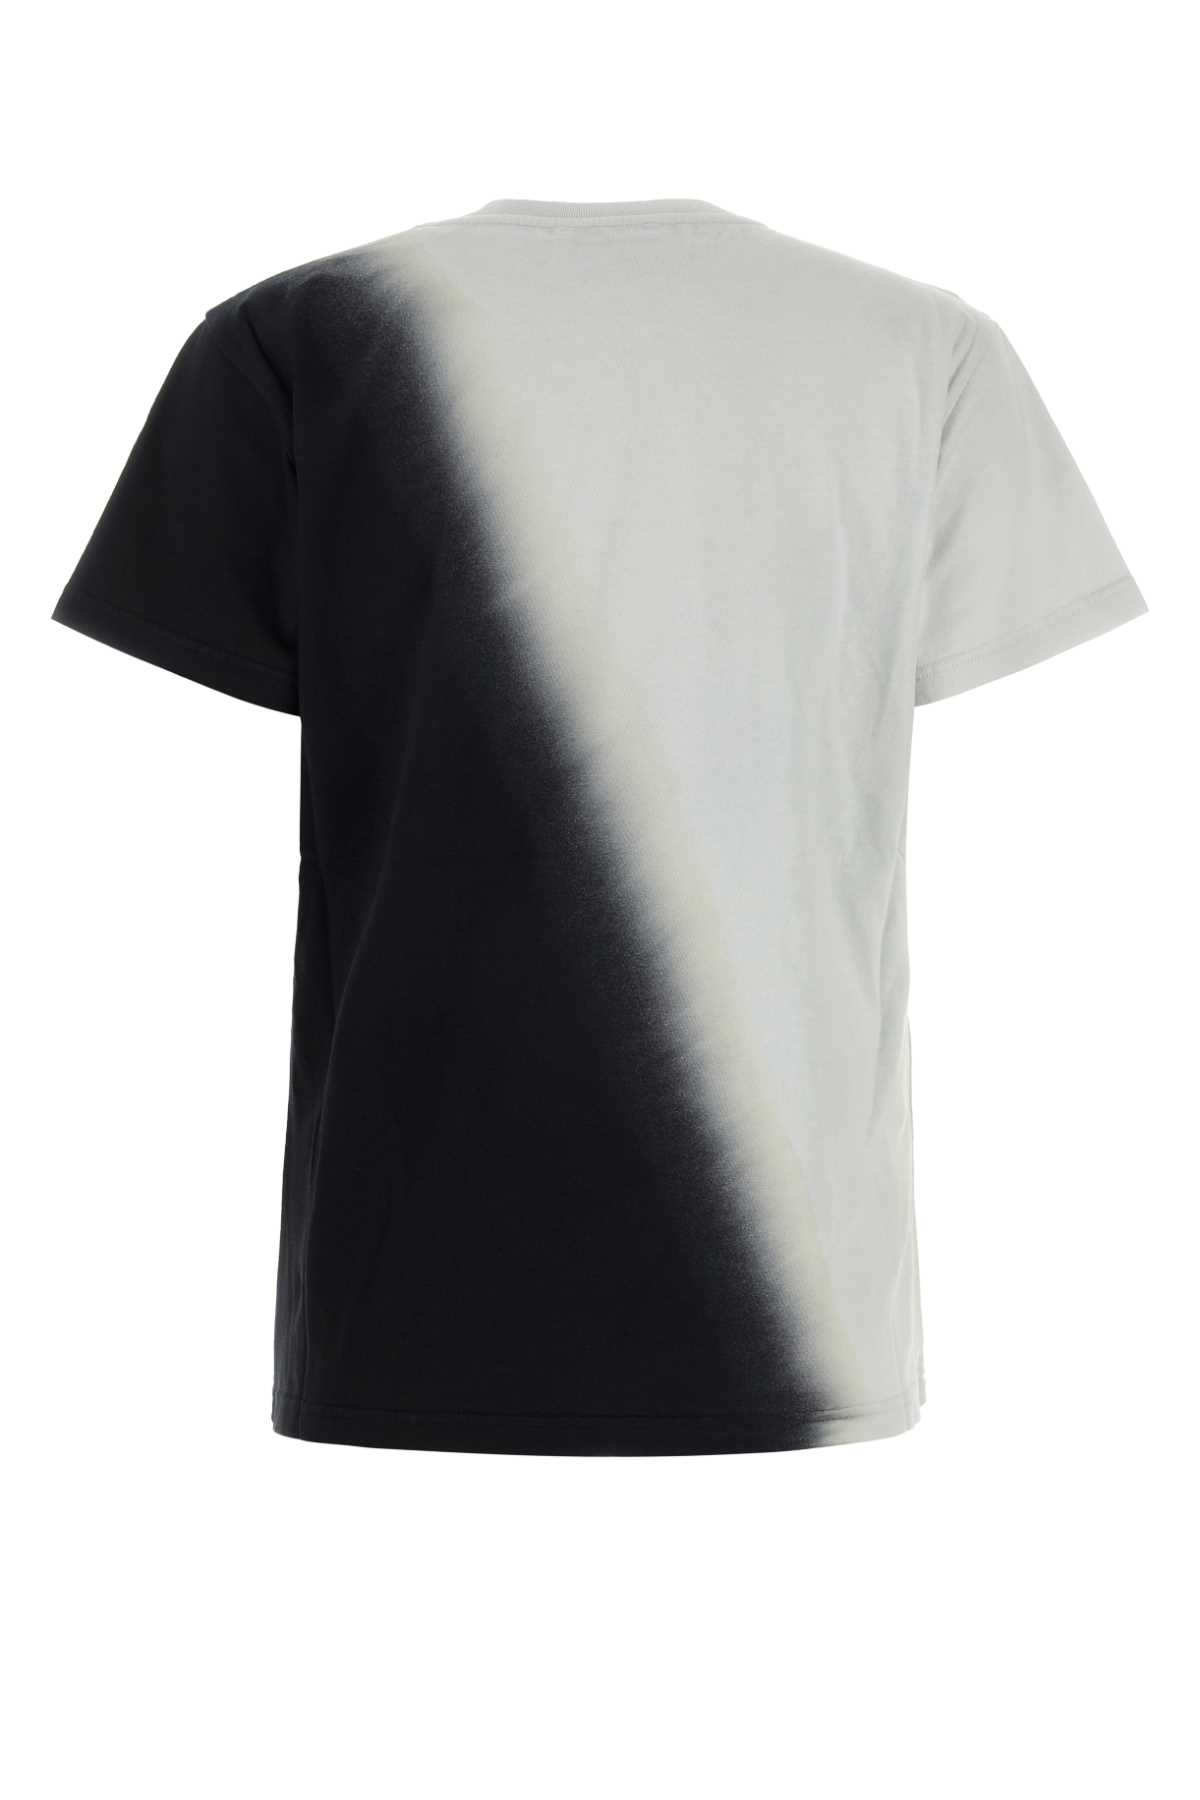 Chloé Two-tone Cotton T-shirt In Blackwhite1